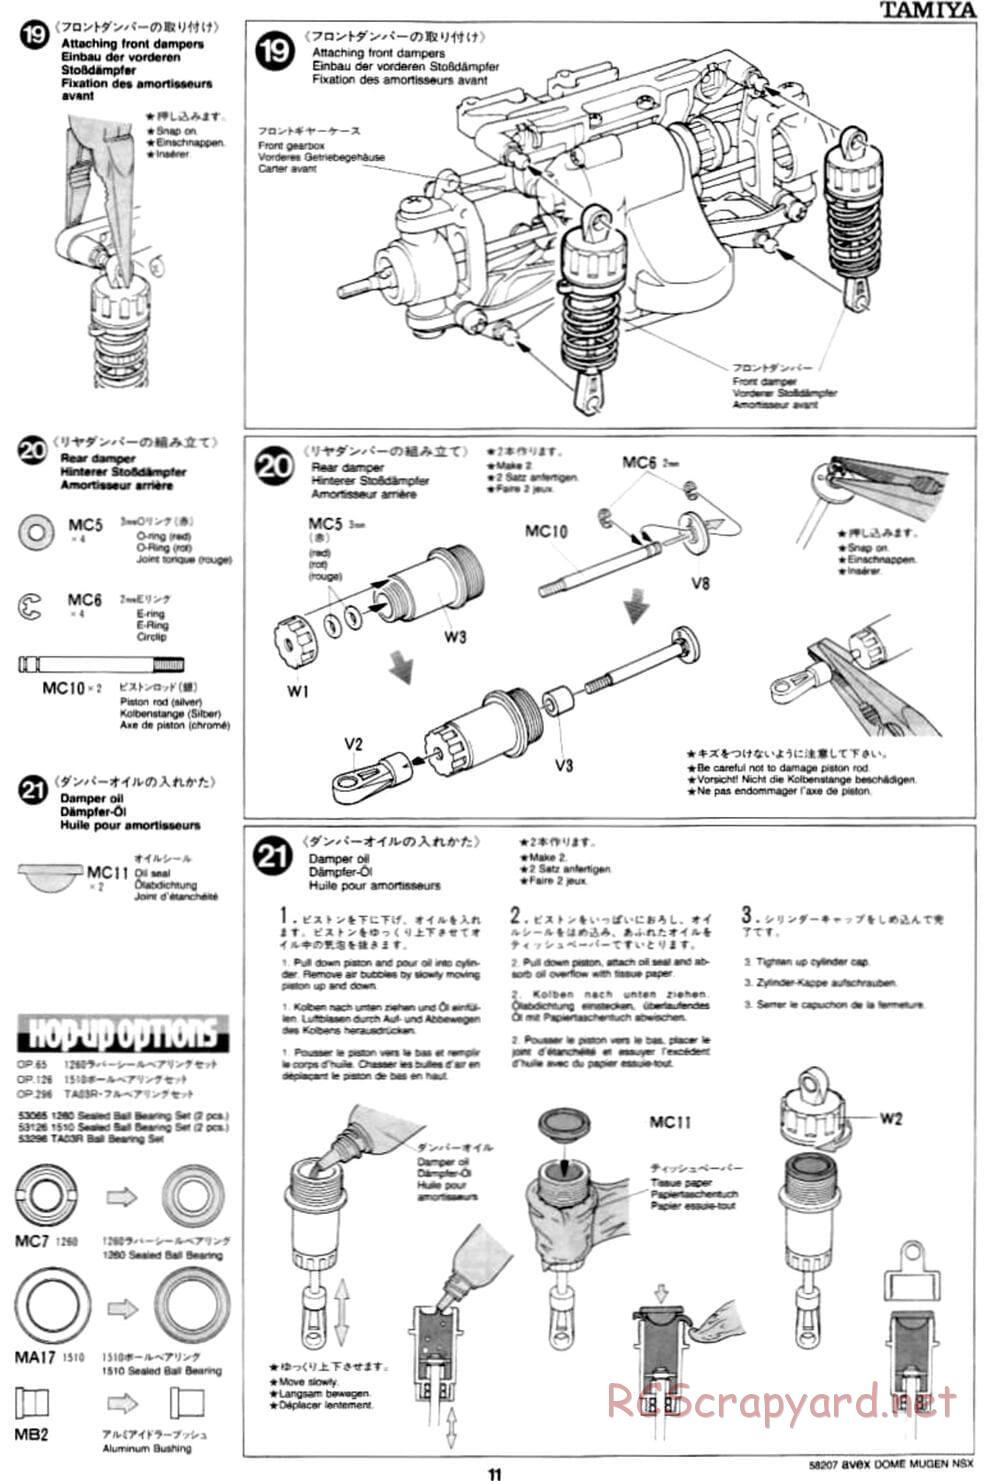 Tamiya - Avex Dome Mugen NSX - TA-03R Chassis - Manual - Page 11